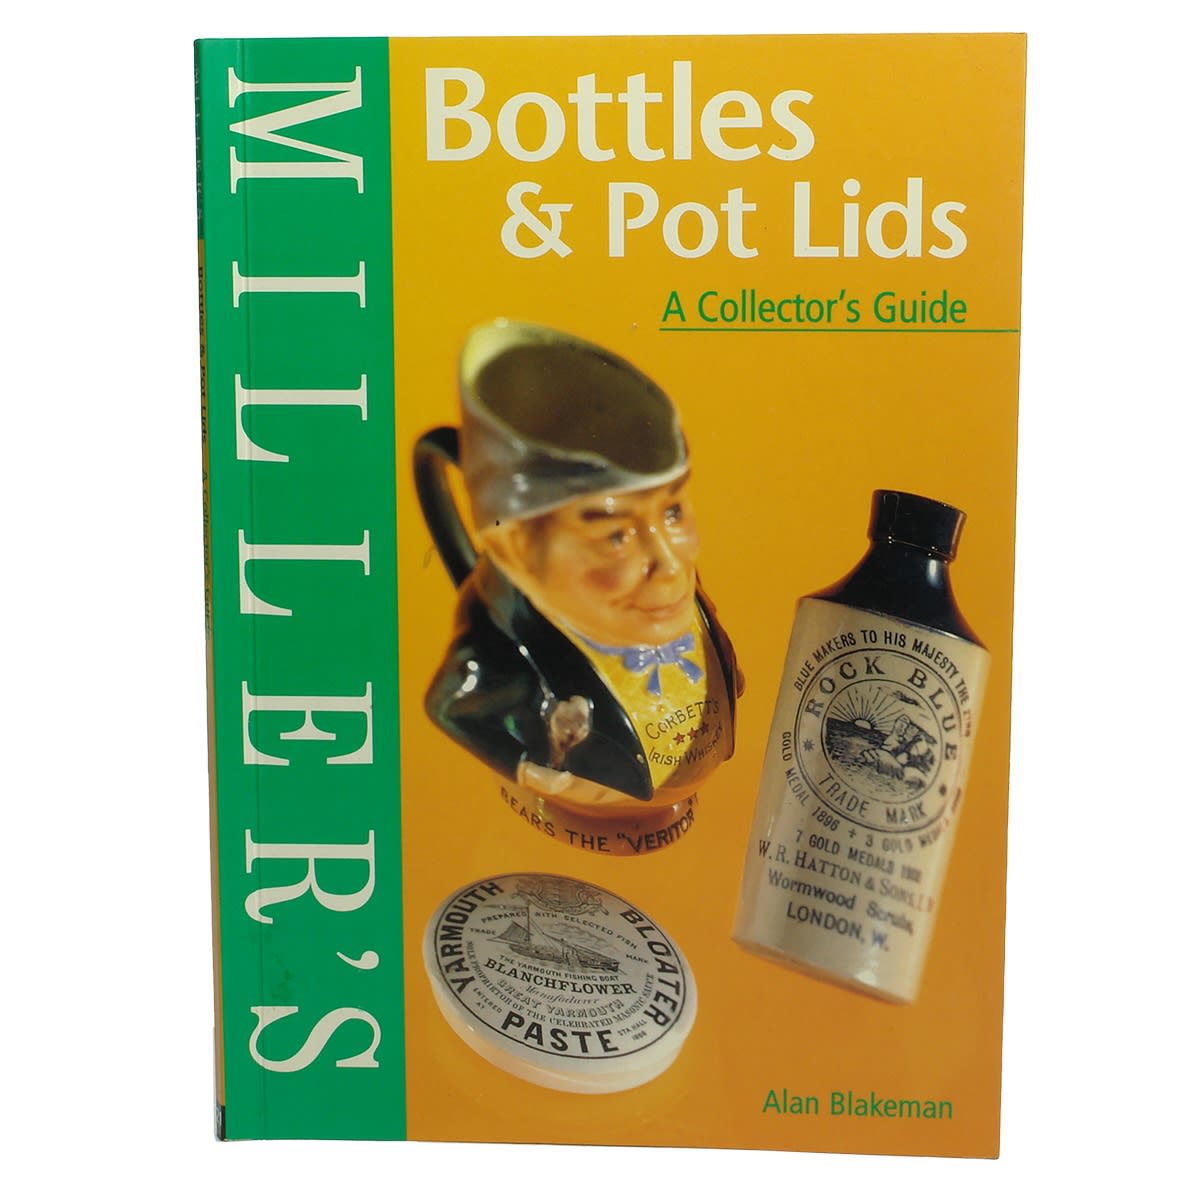 Book. Millers Bottles & Pot Lids, A Collector's Guide, Alan Blakeman, 2002. (United Kingdom)